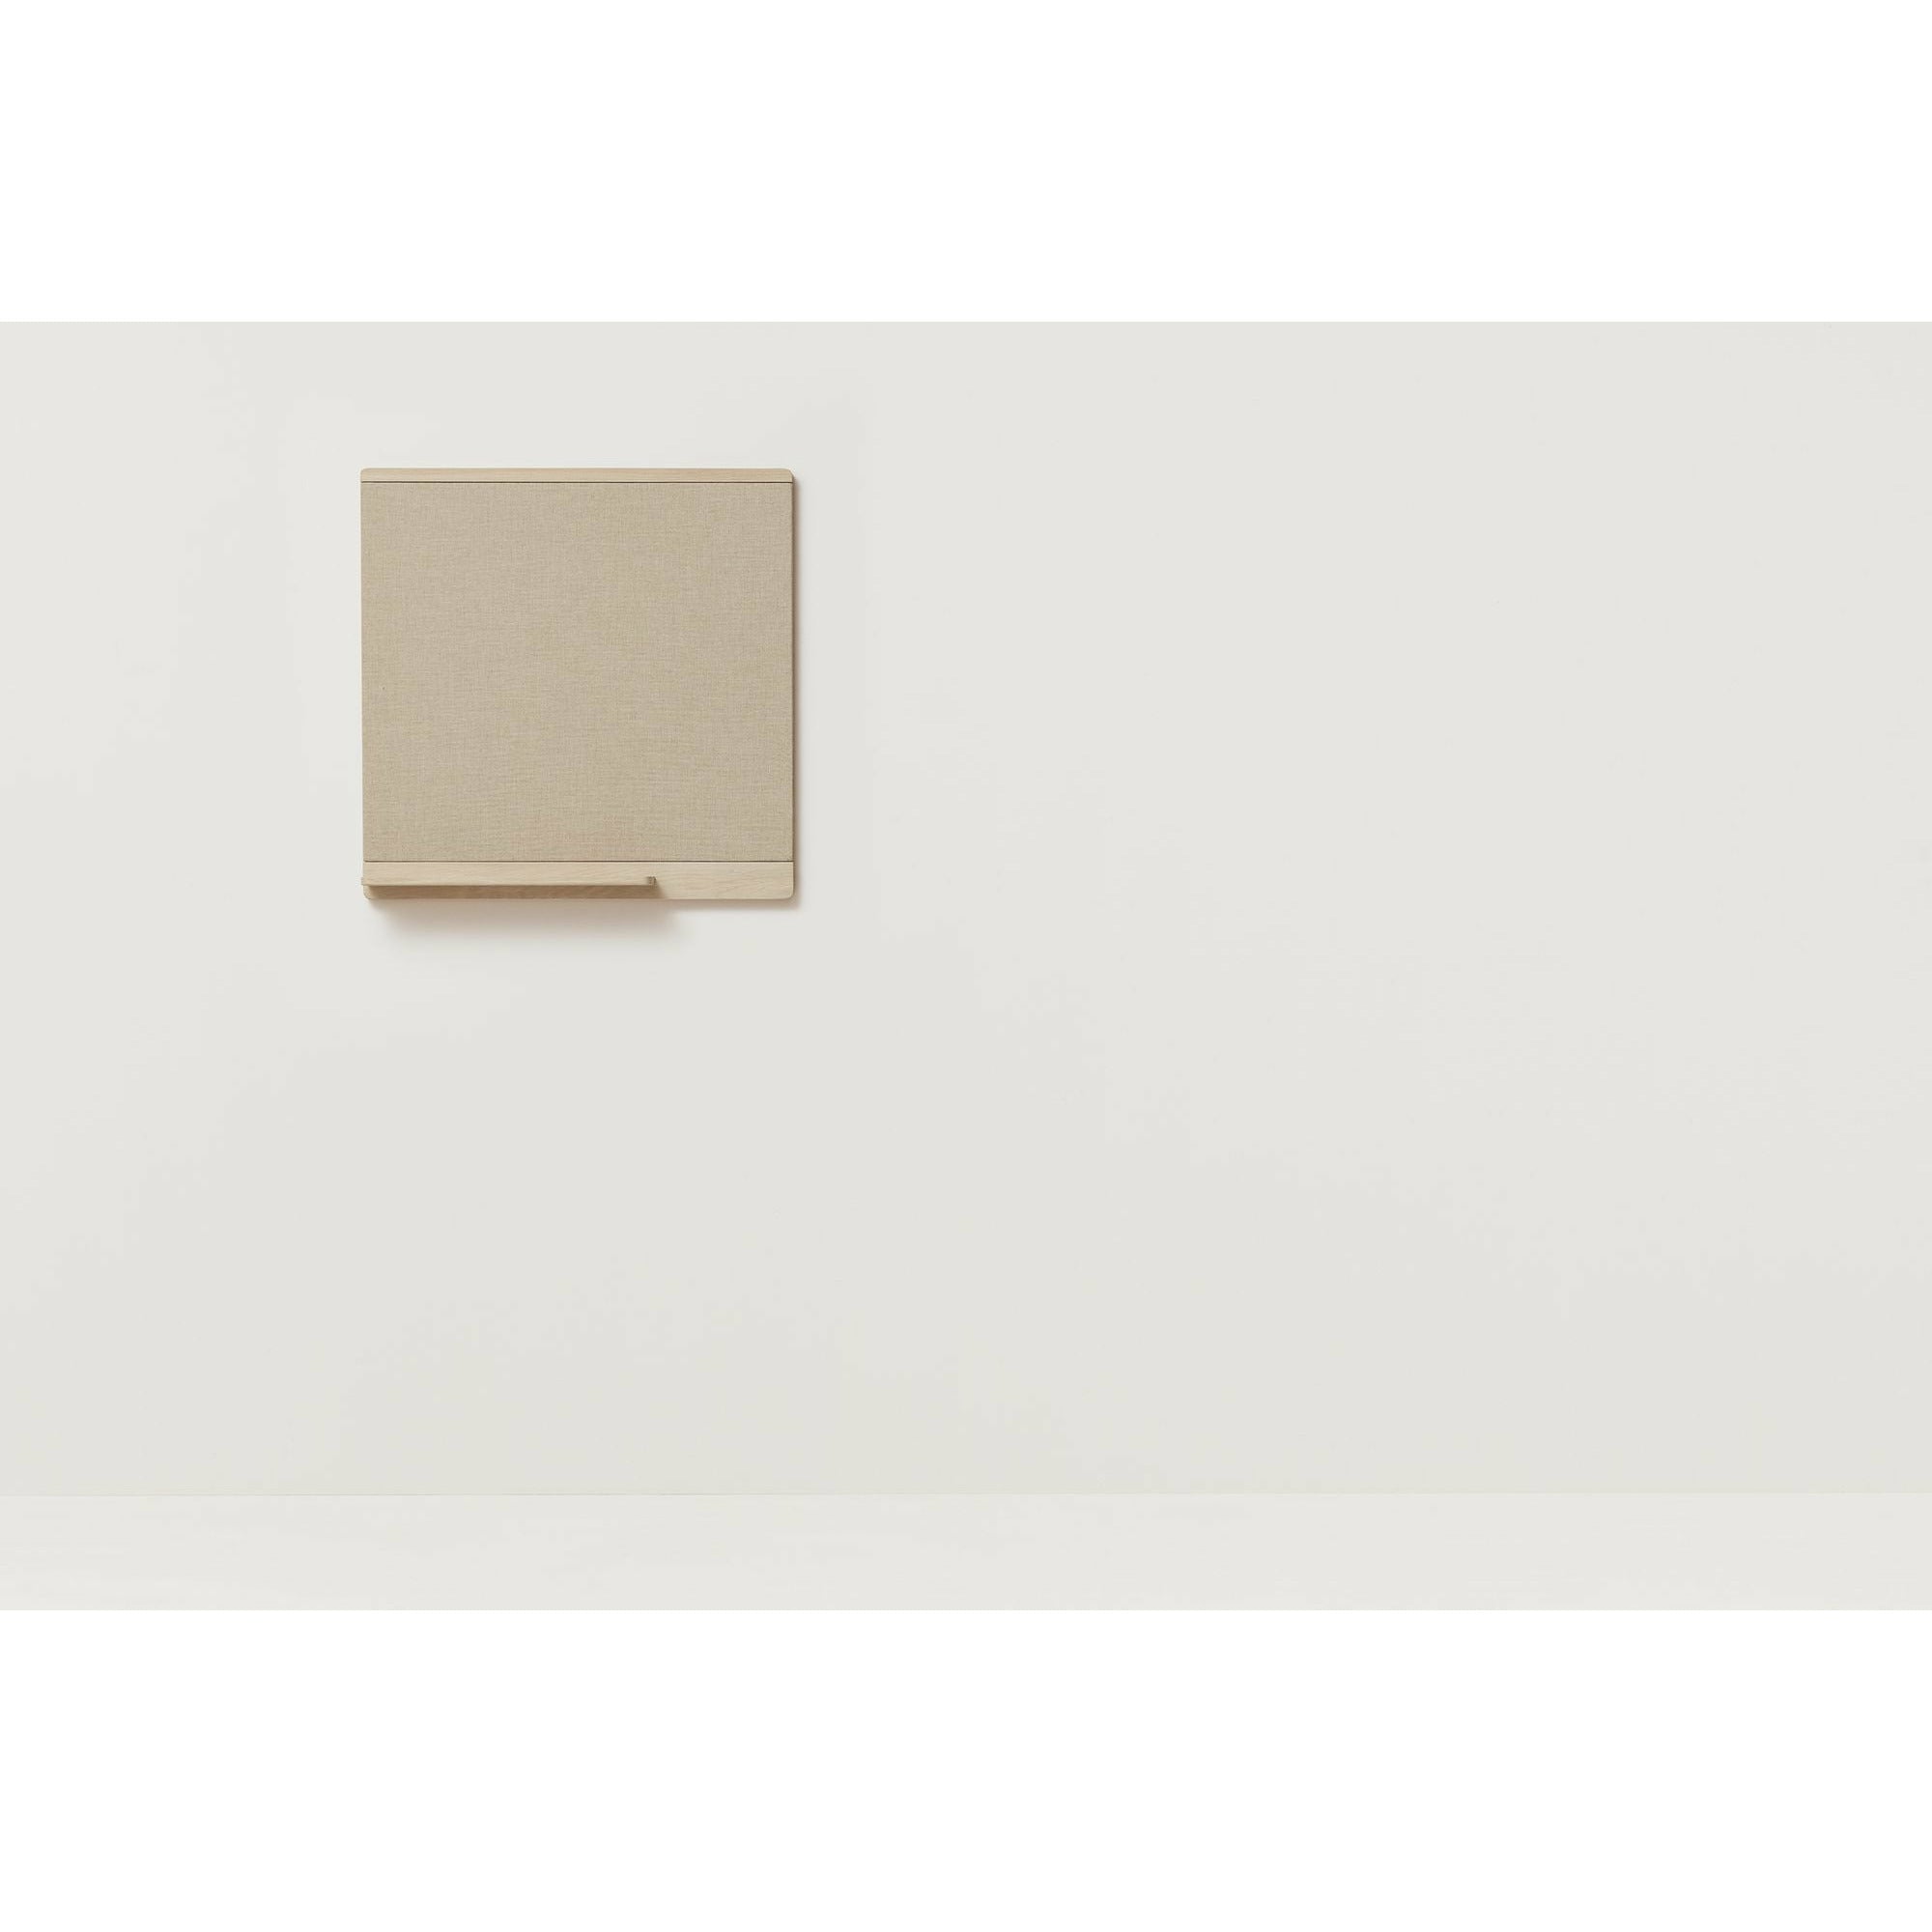 Form & Refine Porage de jante 75x75 cm. chêne blanc